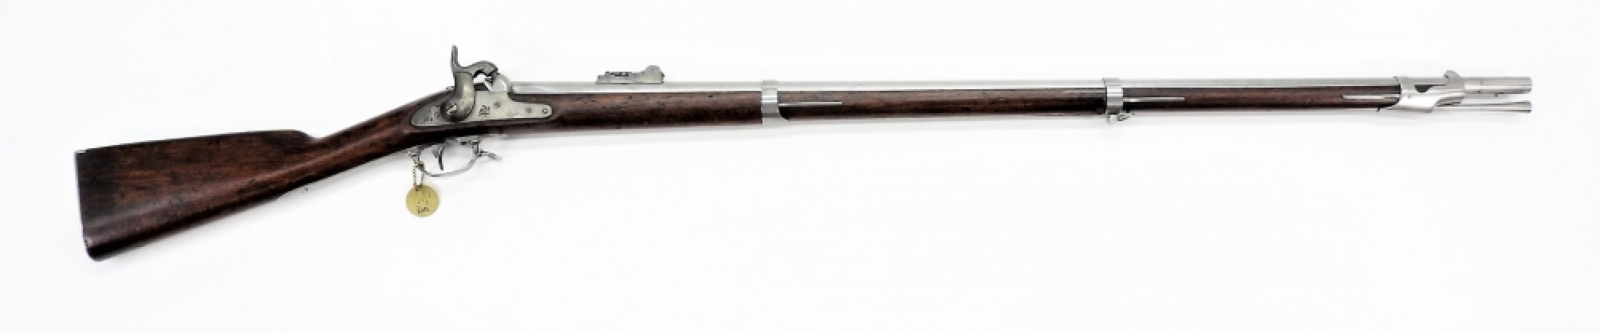 Circa-1853 Springfield Armory Model 1851 cadet musket, estimated at $1,500-$2,500